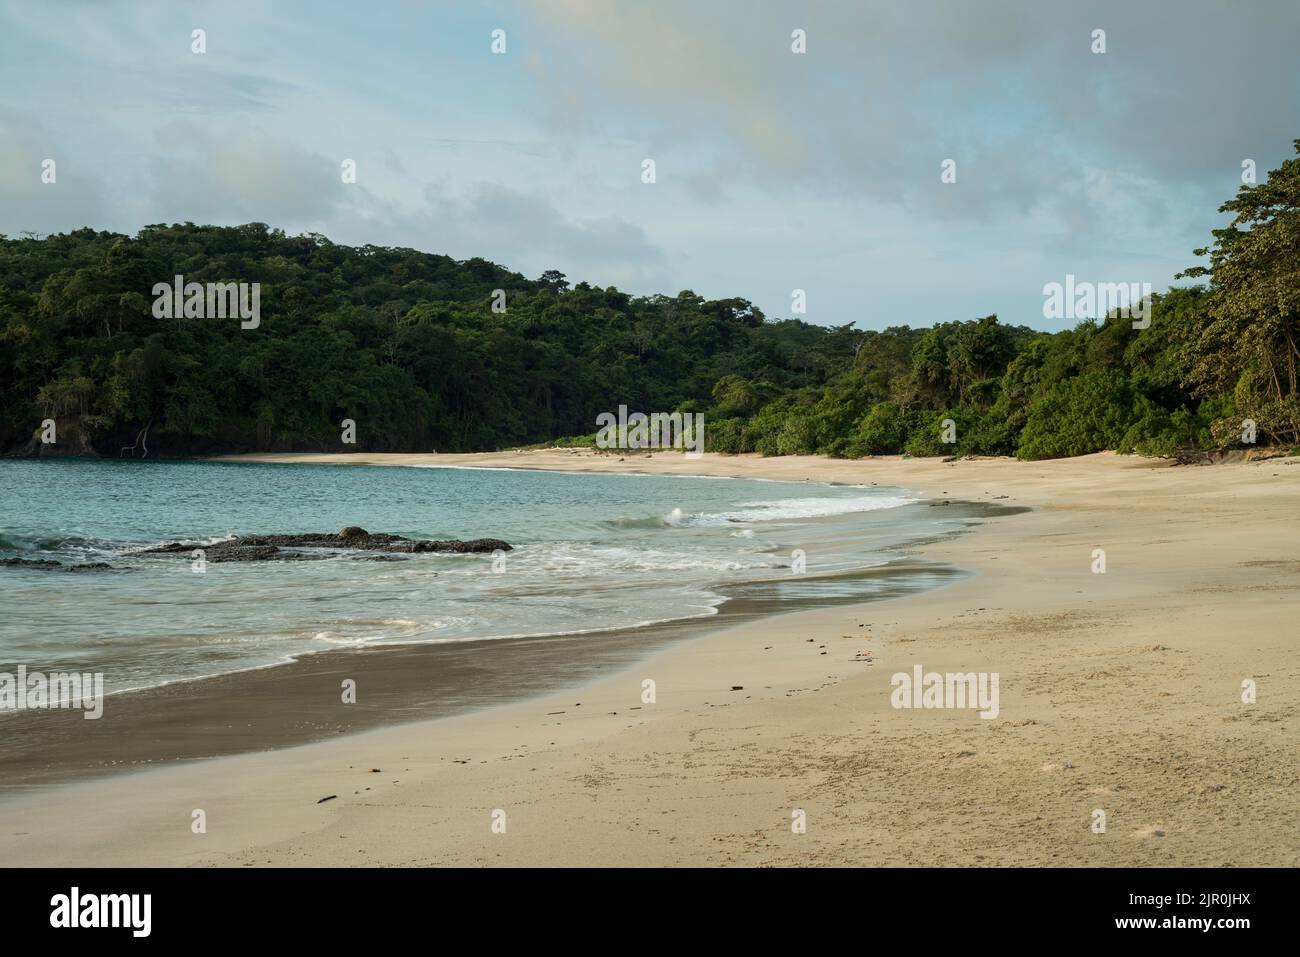 Tropical beach at low tide, Las Perlas archipelago, Panama - stock photo Stock Photo